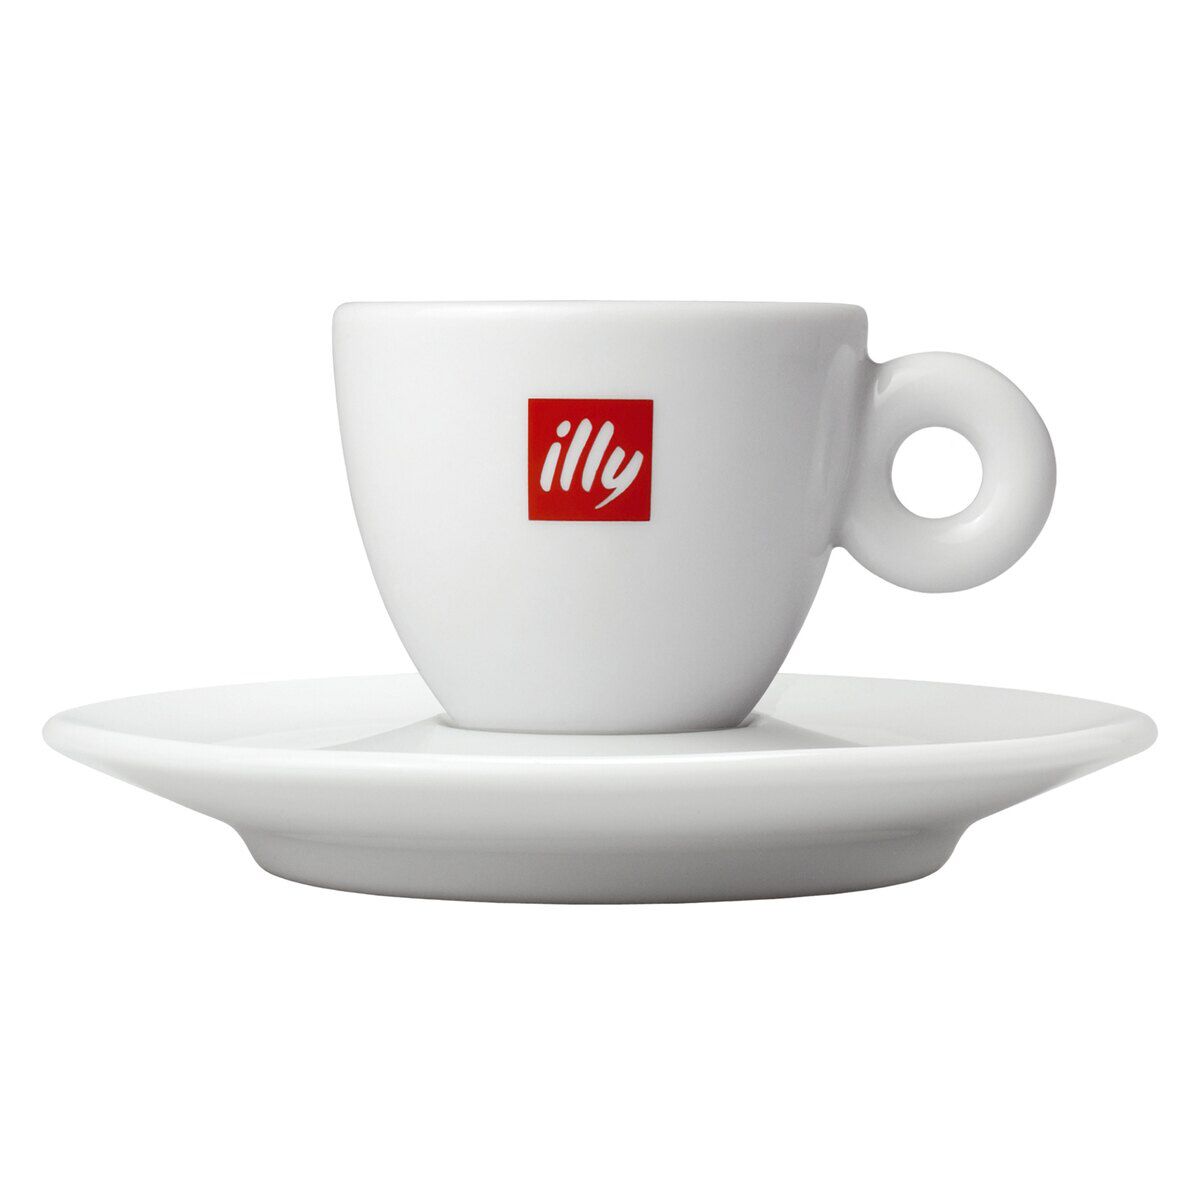 illy Logo Espresso Cup - One 3oz Espresso Cup